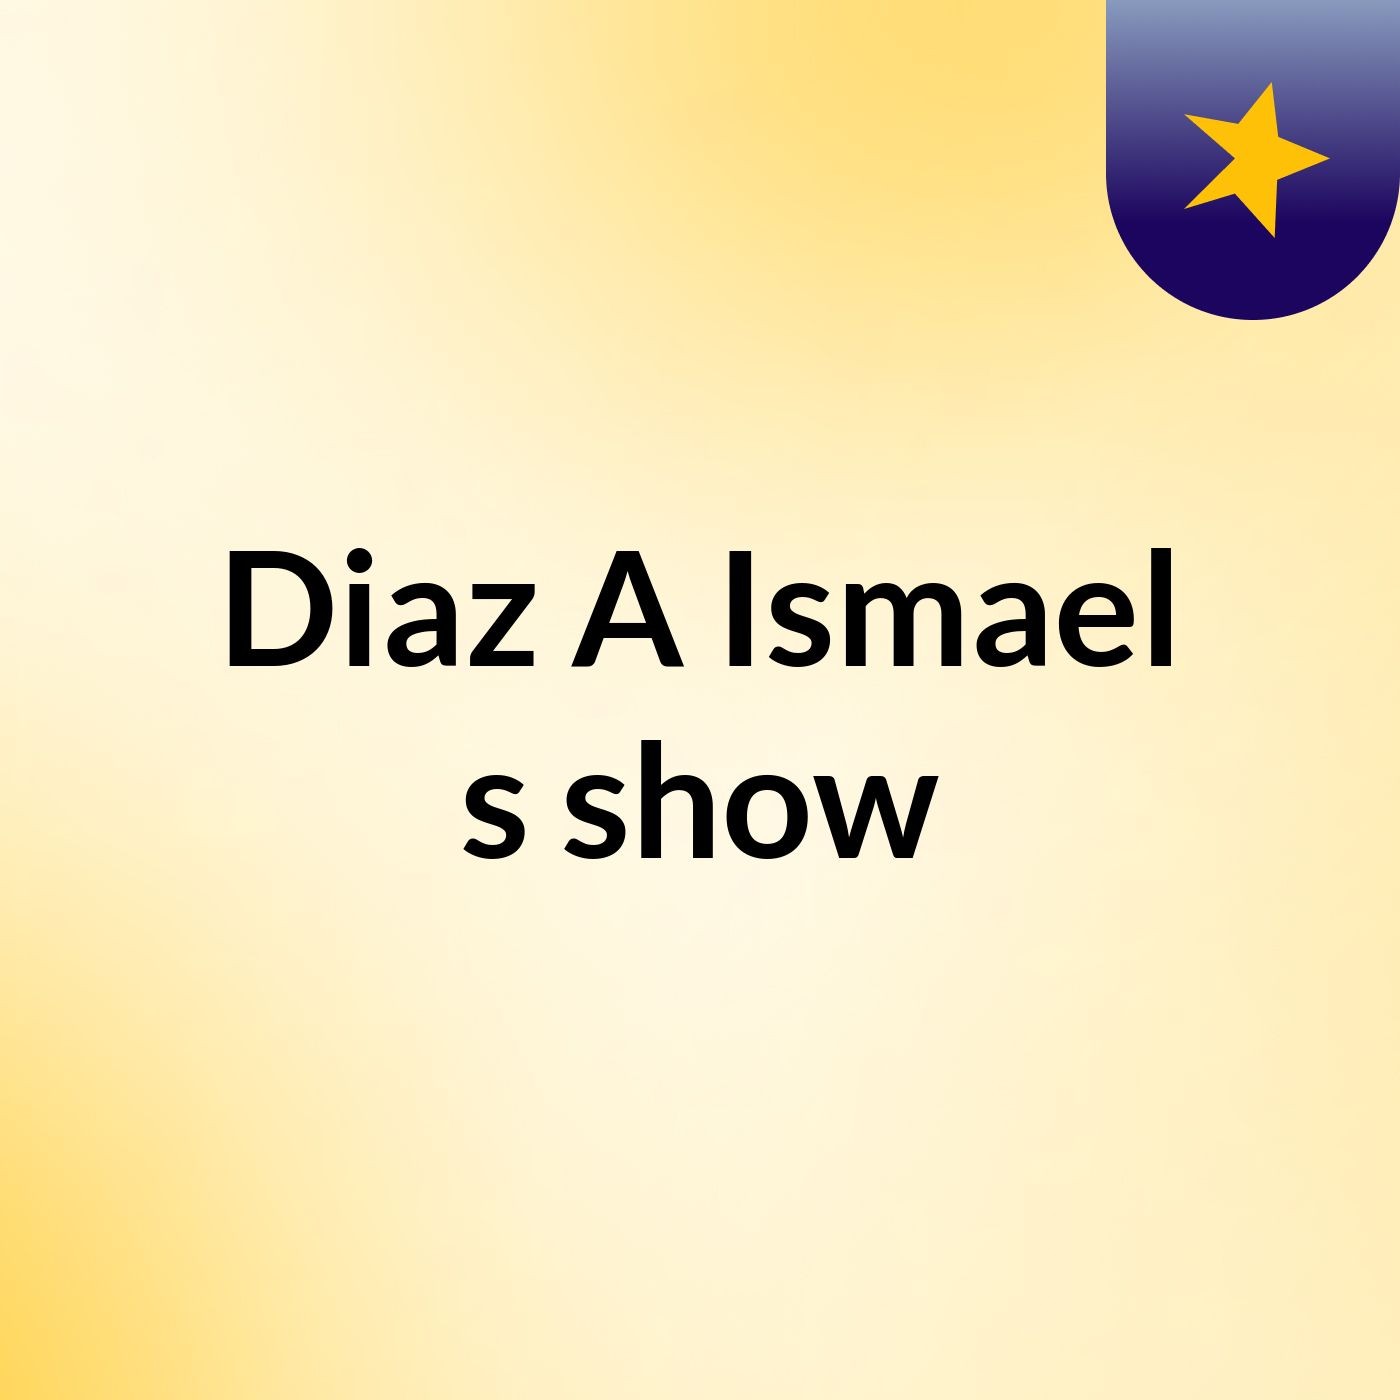 Diaz A Ismael's show